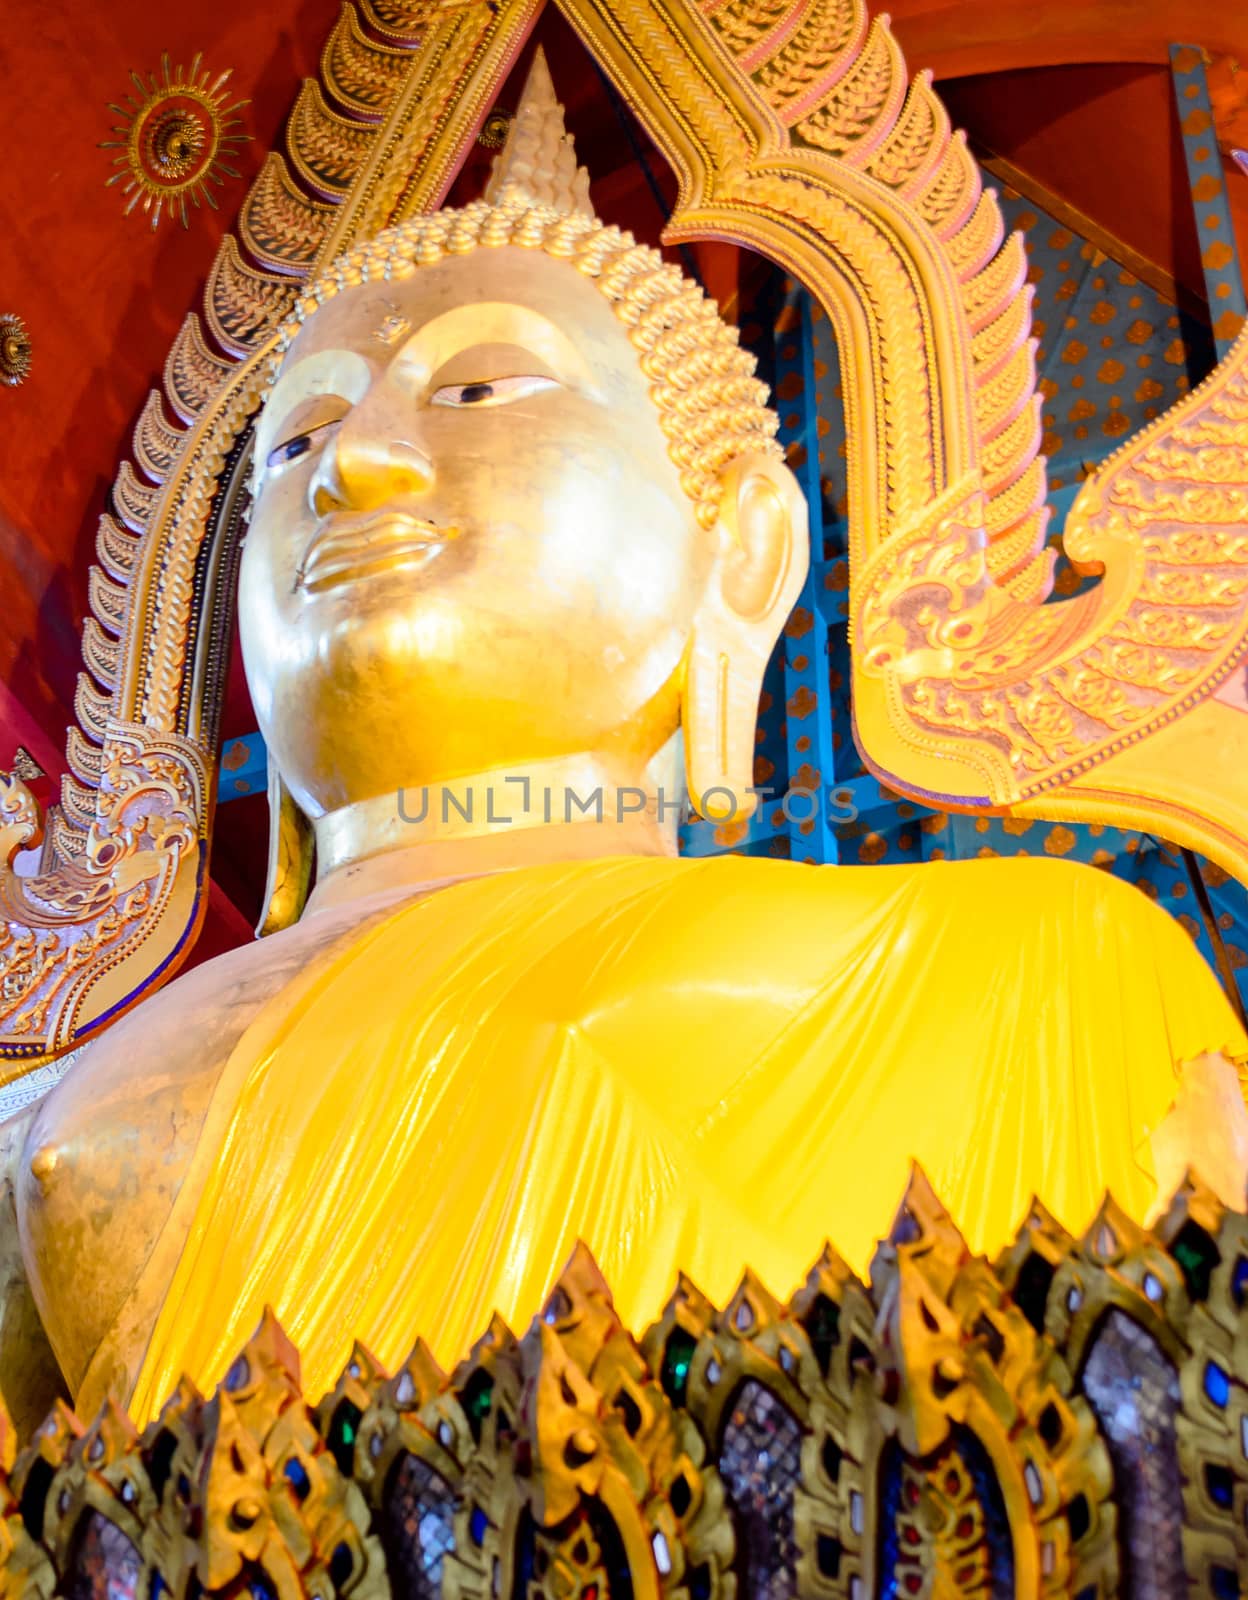 The Golden Buddha Image Statue at Outdoor at ancient temple,Wat Ton Son,Ang Thong,Thailand.